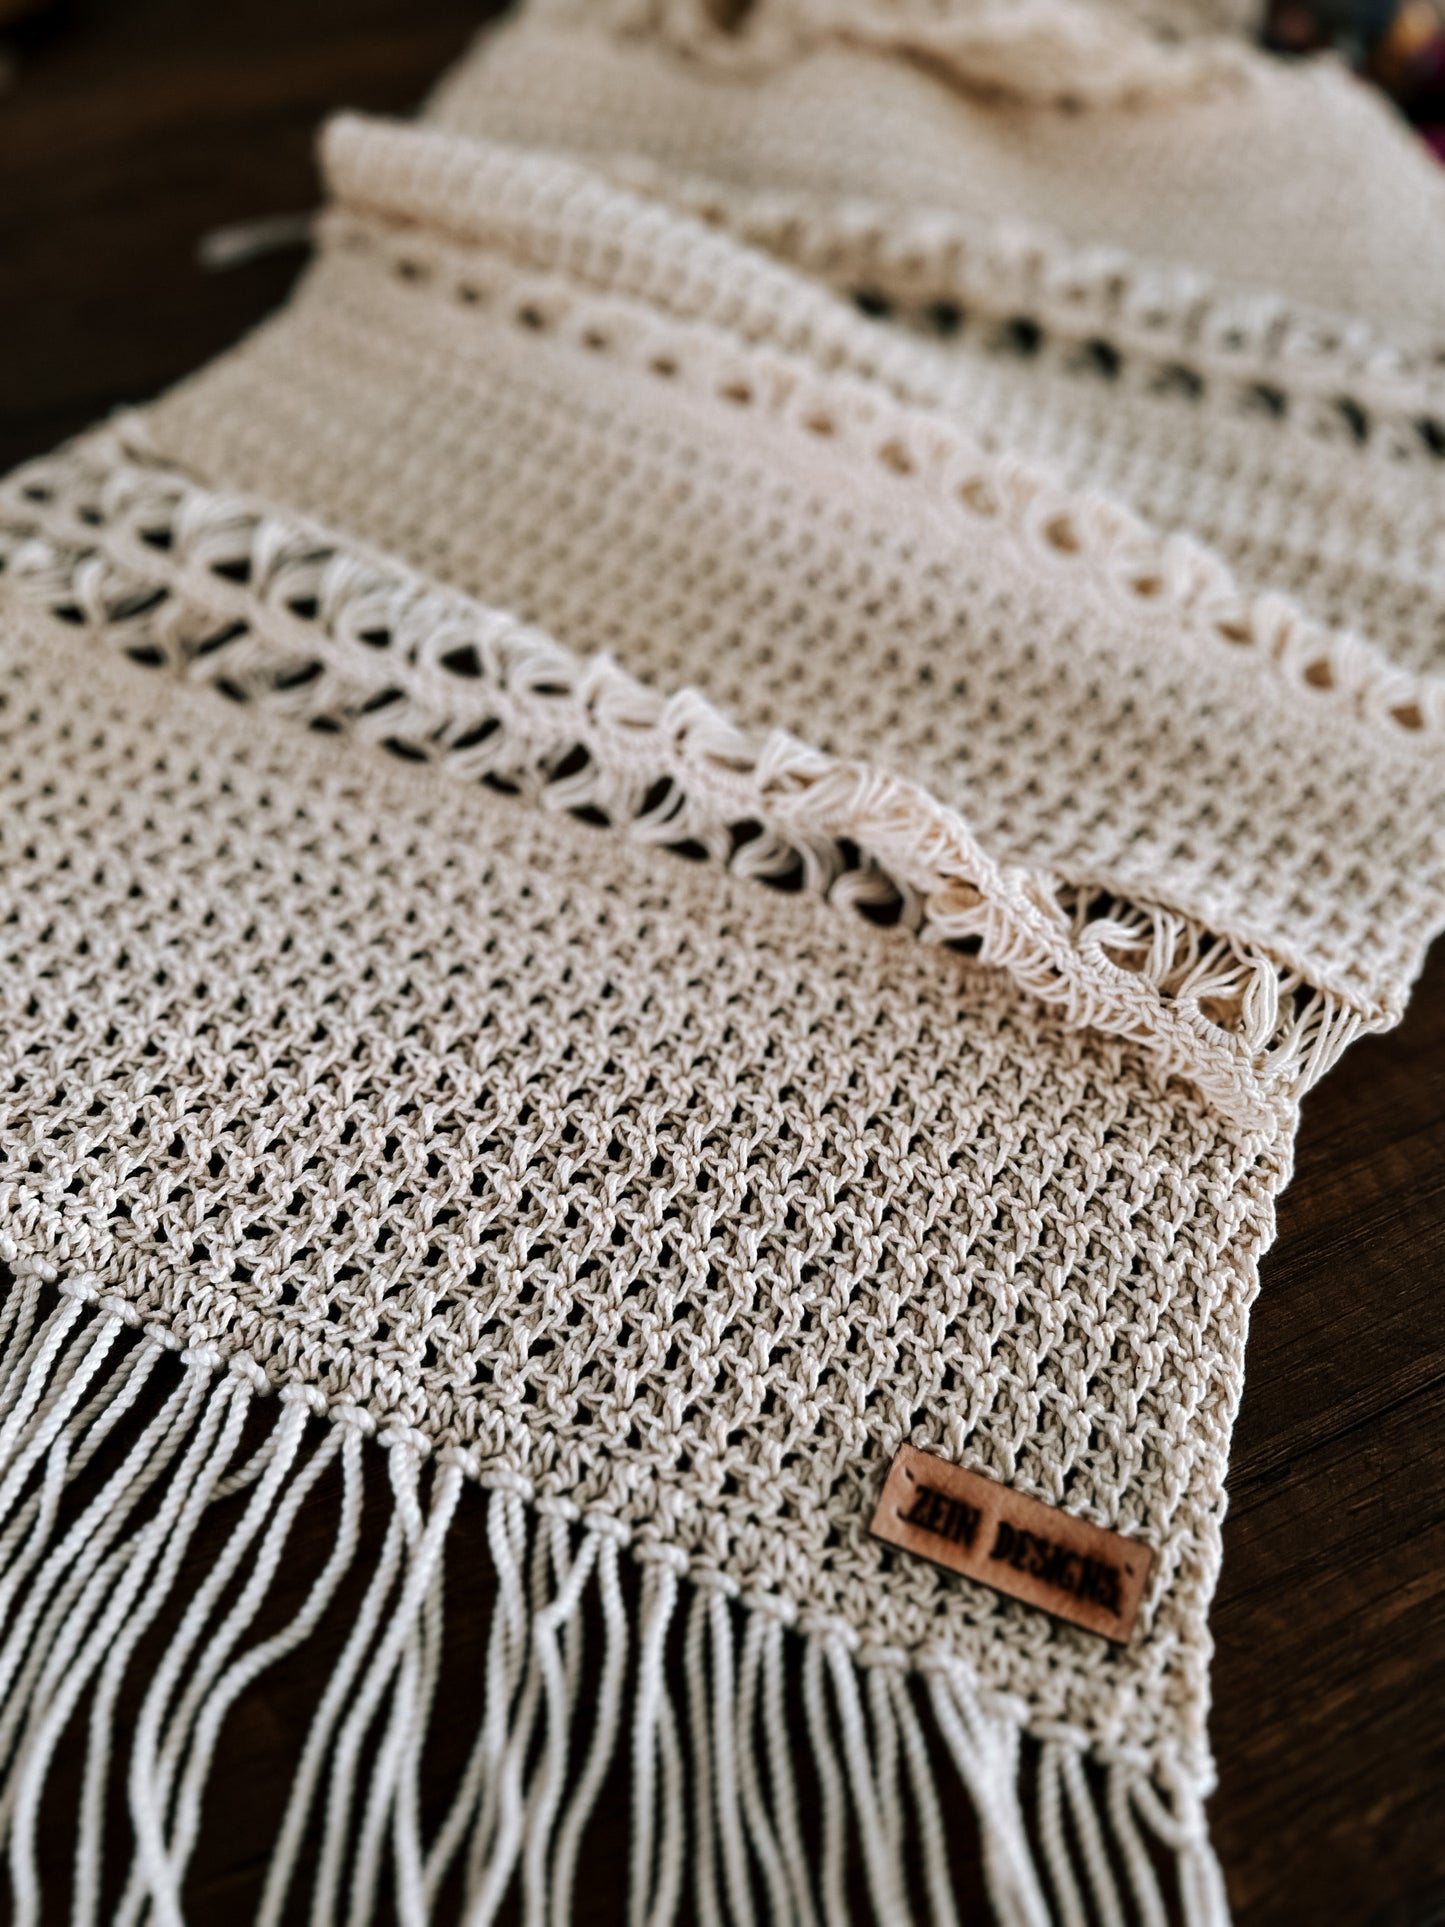 Cotton Stitches Table Runner Crochet pattern